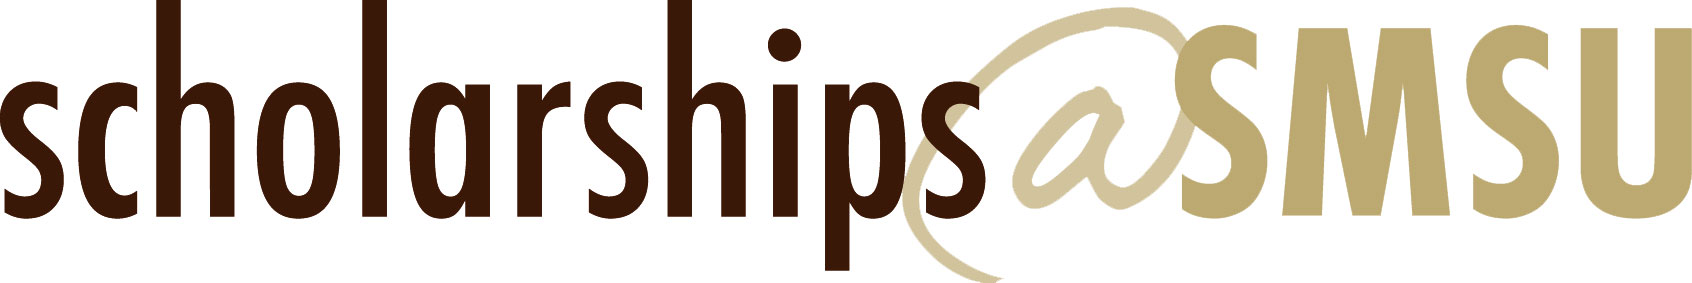 scholarships at smsu logo